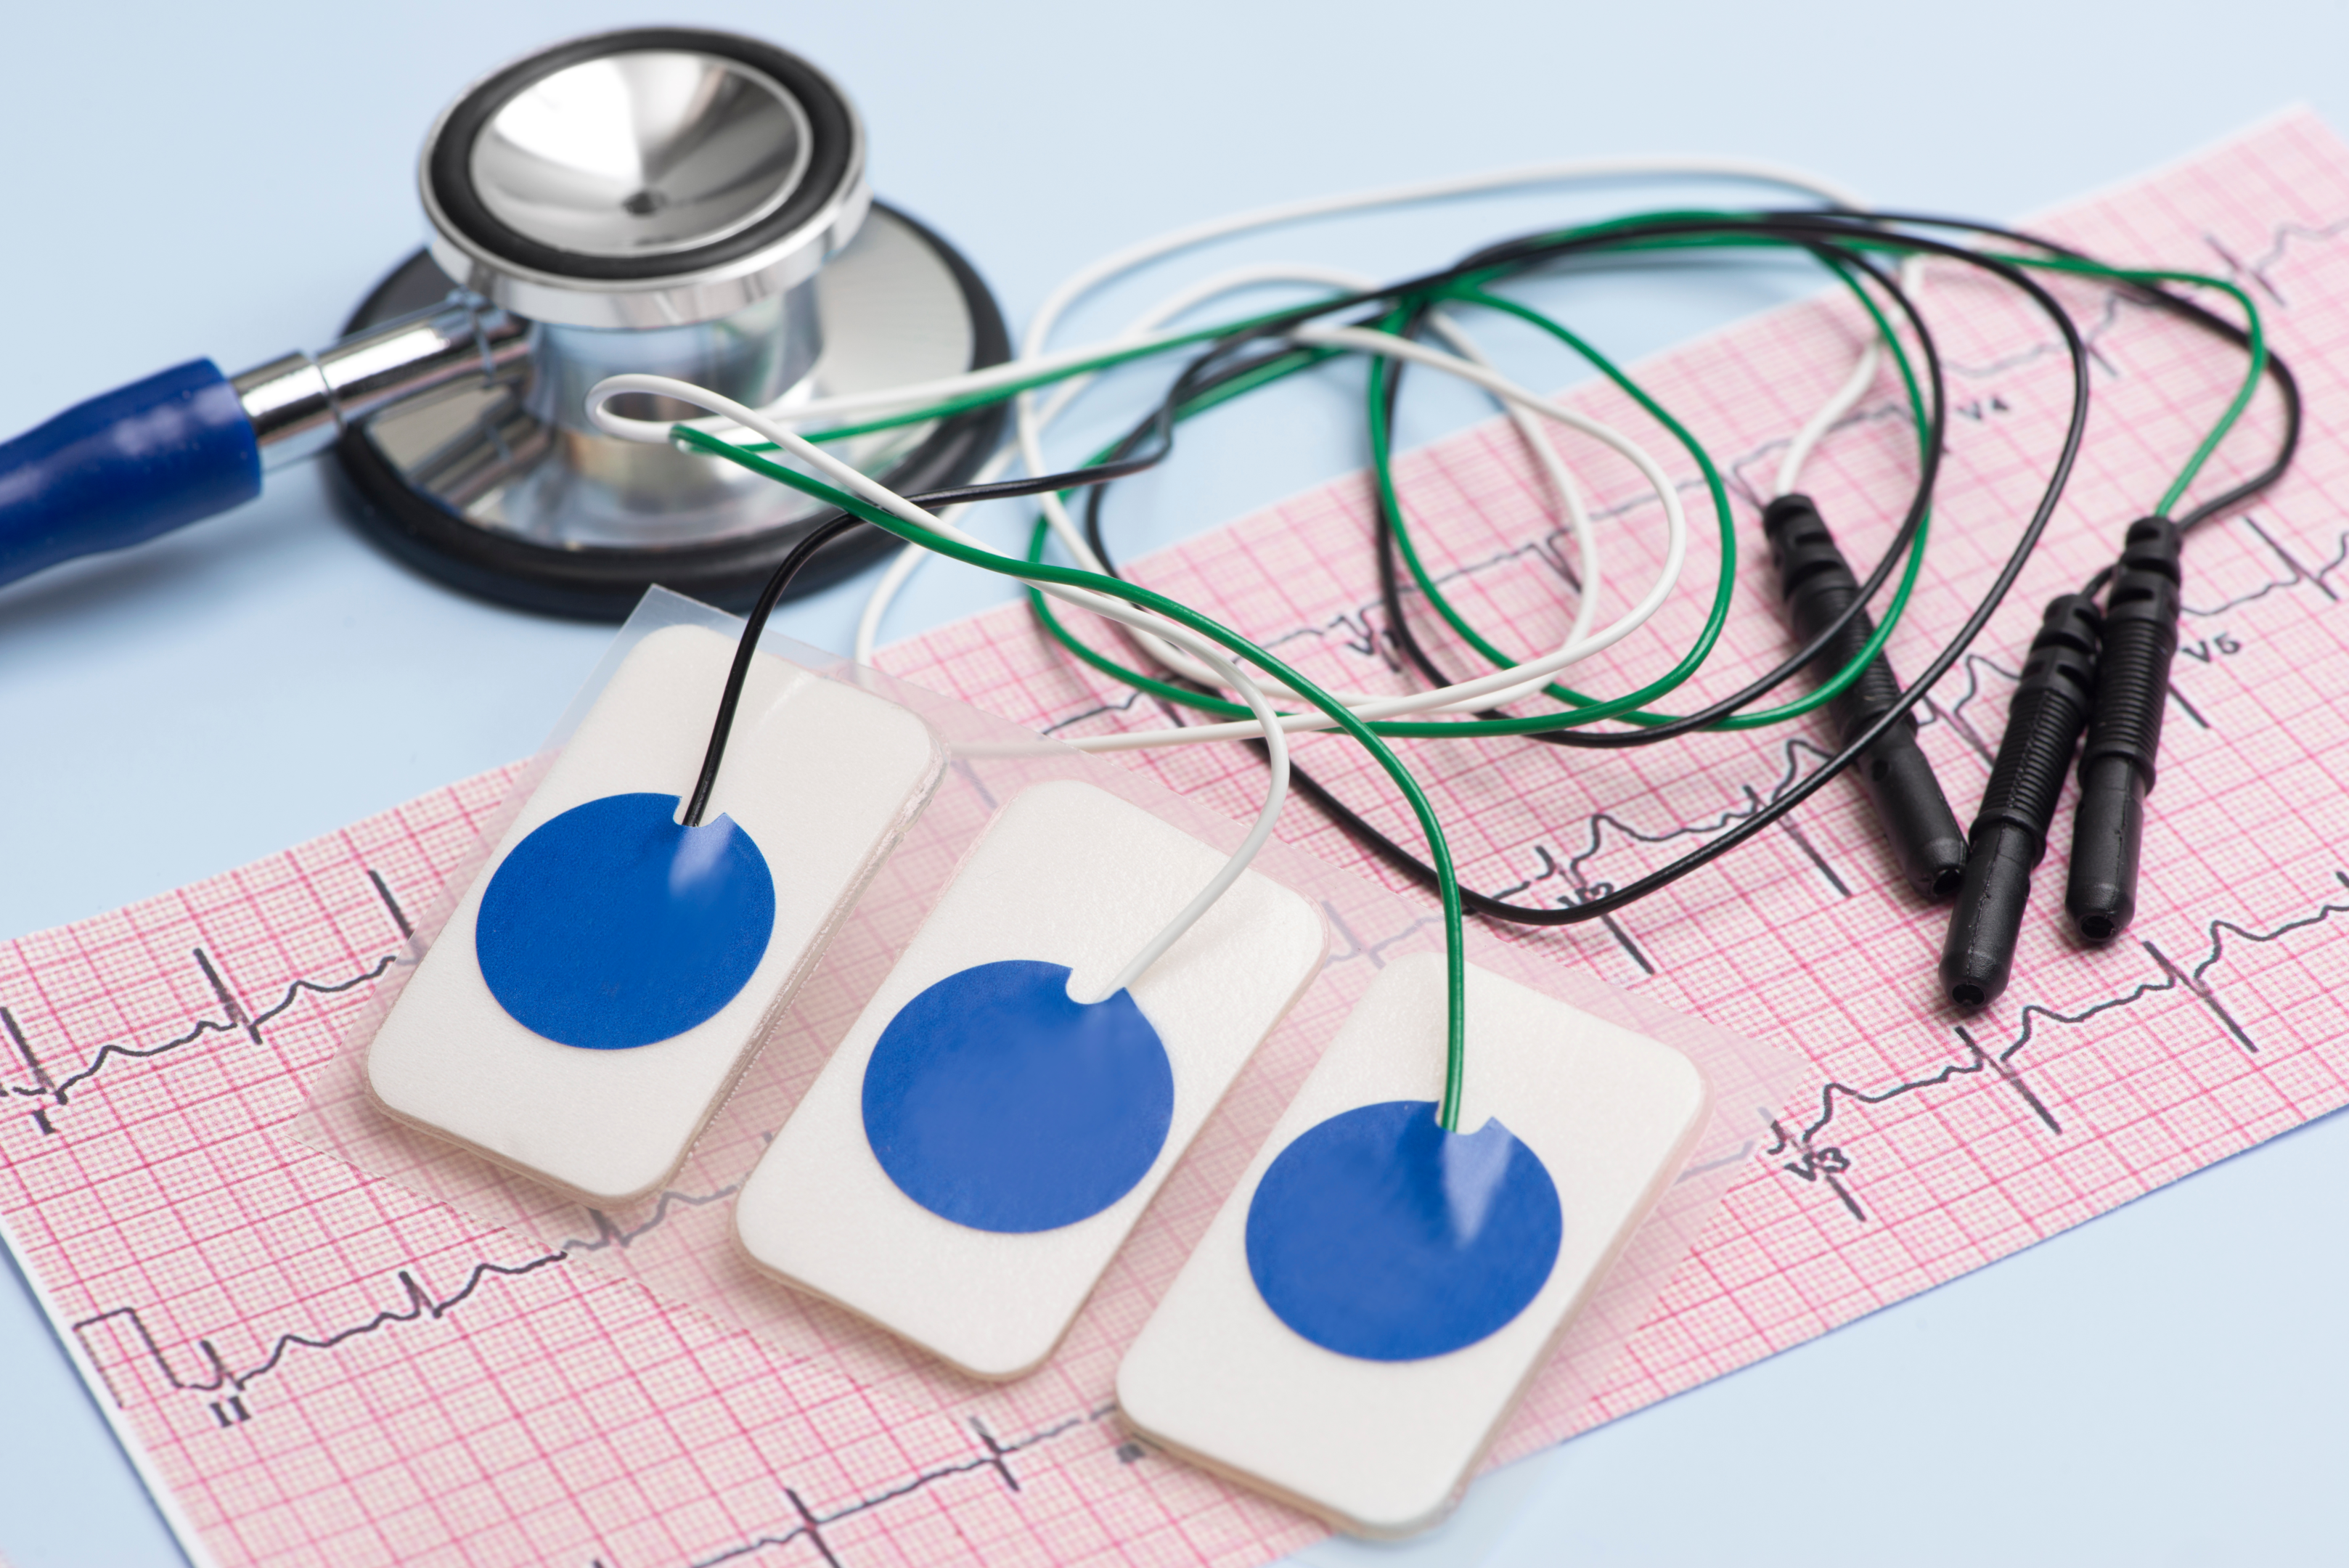 Electrocardiogram for monitoring cardiac health